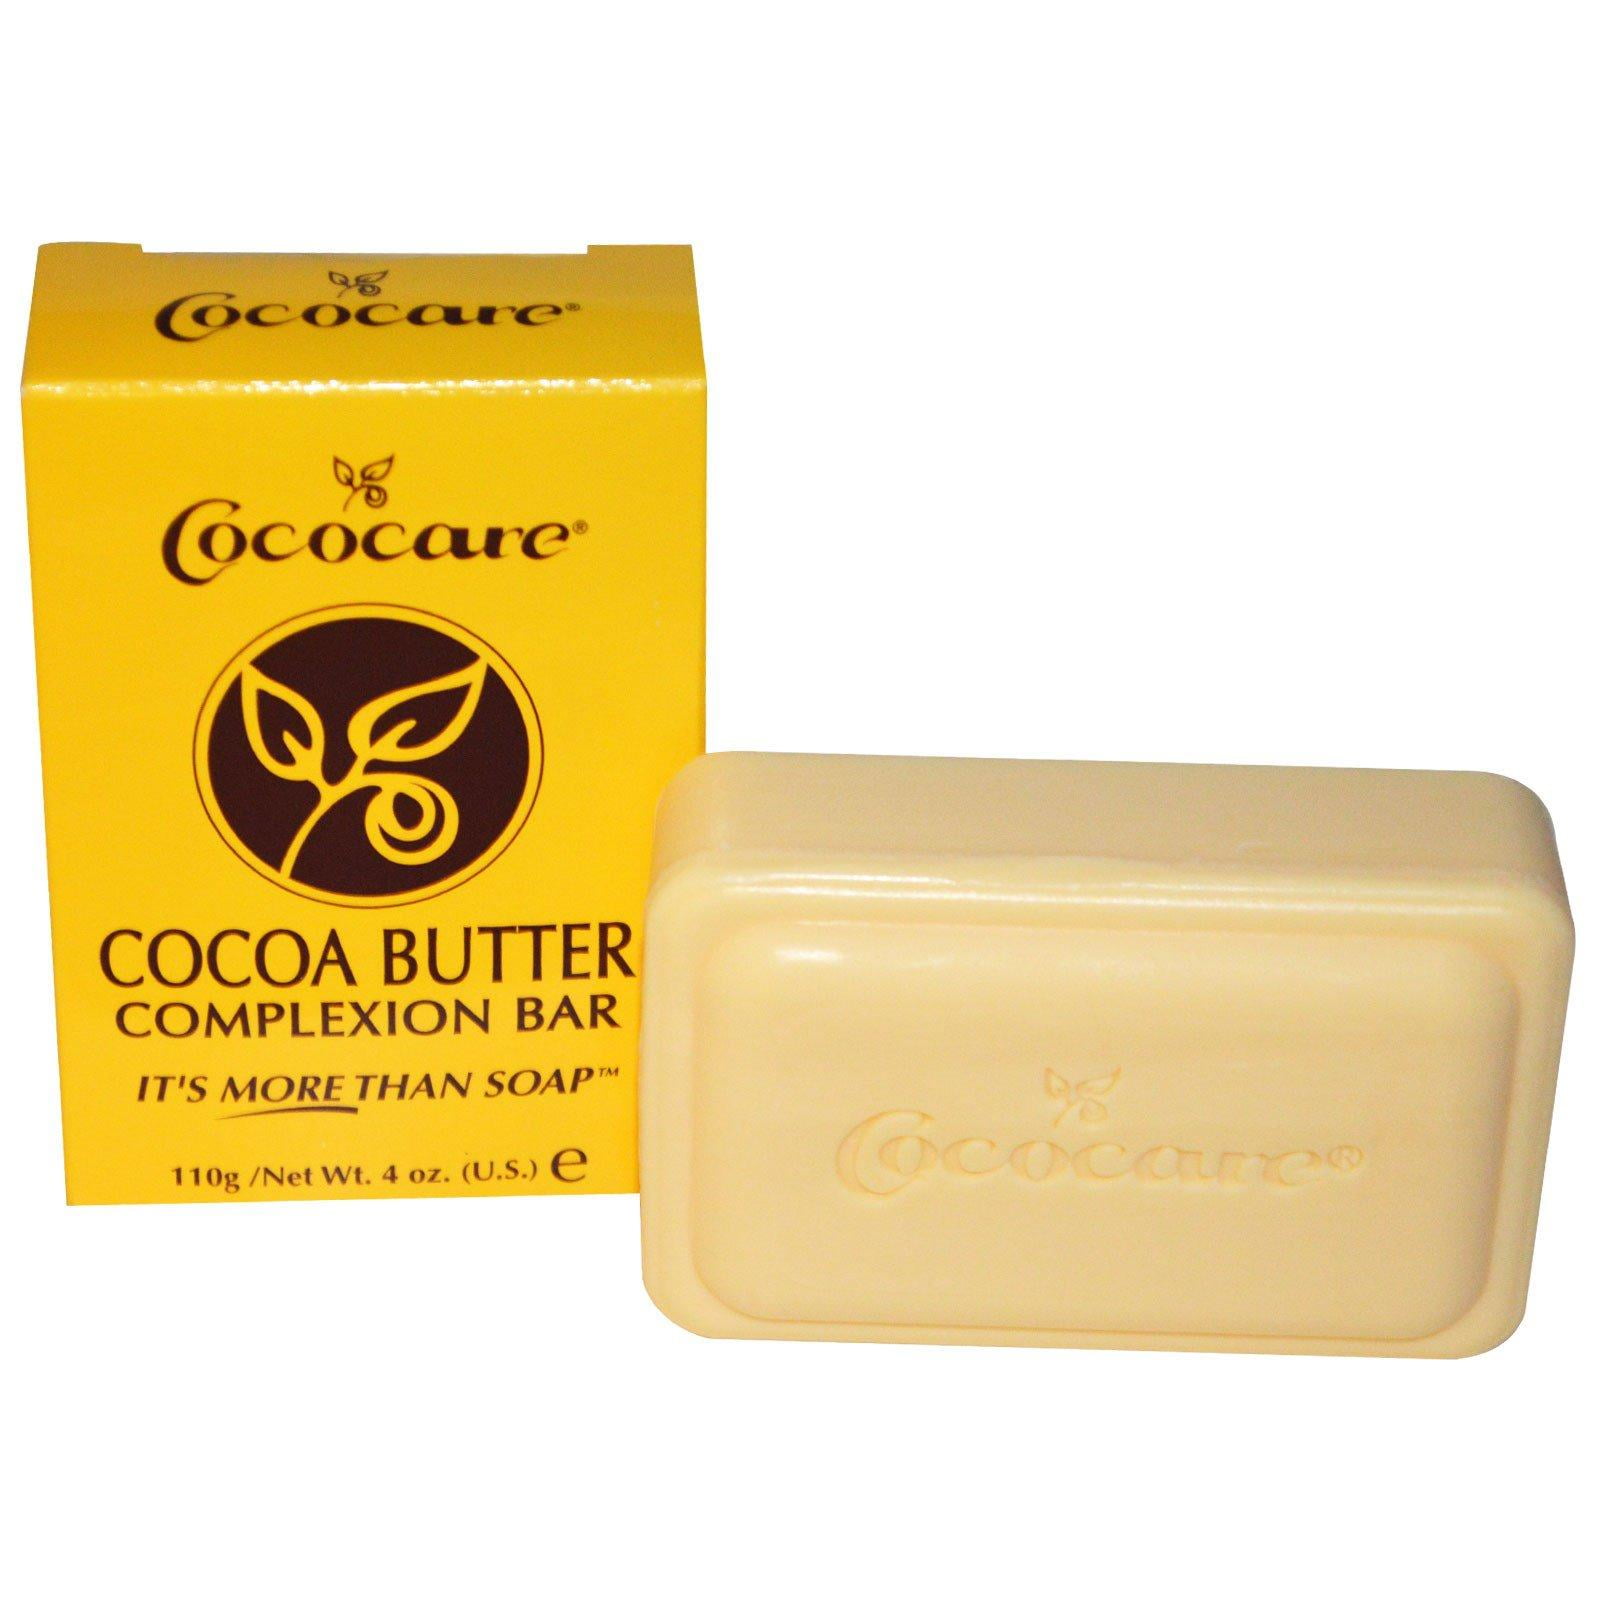 Melt and Pour Soap Base │ 1lb of Shea Butter Soap Base │ Glycerin Soap  Making